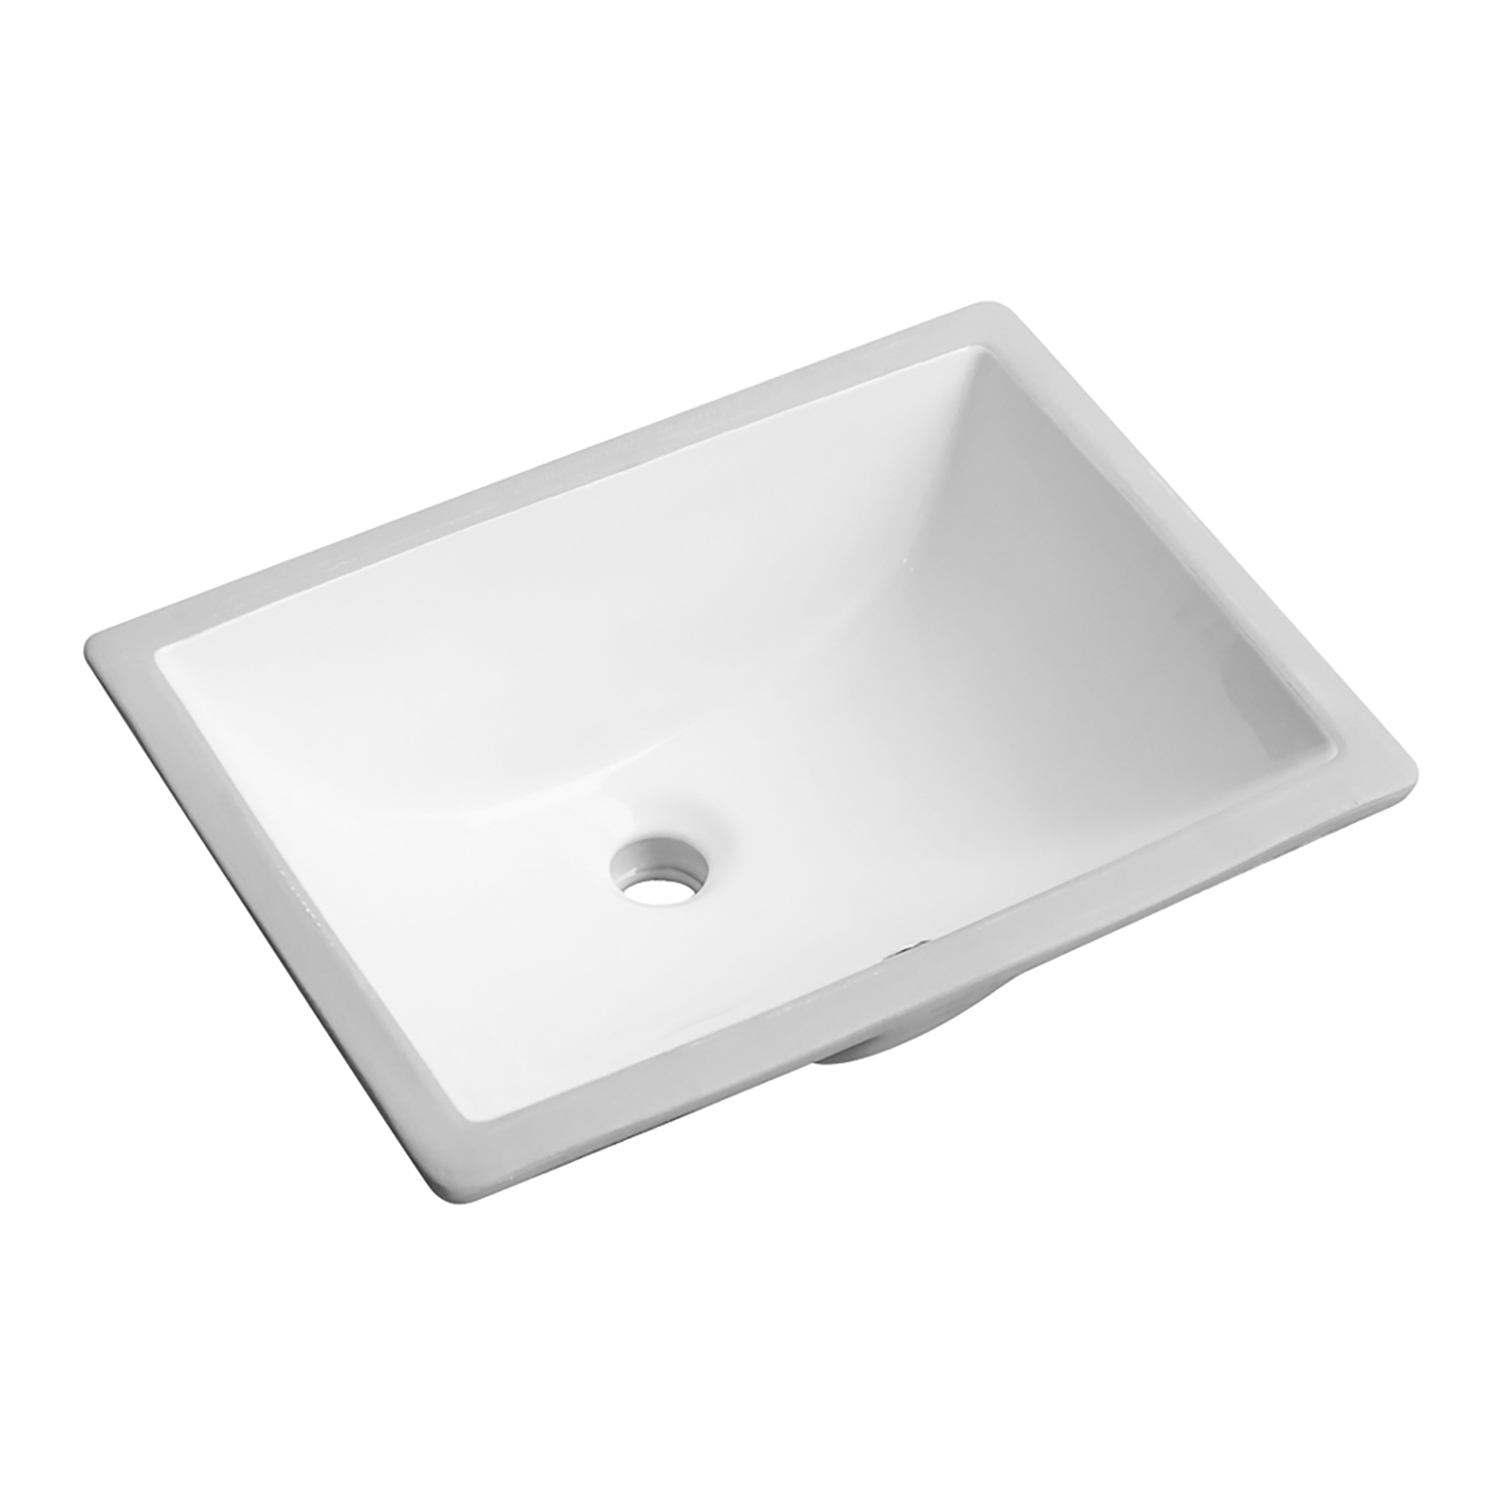 C2018 18" x 13" White Square Ceramic Undermount Bathroom Vanity Vessel Sink